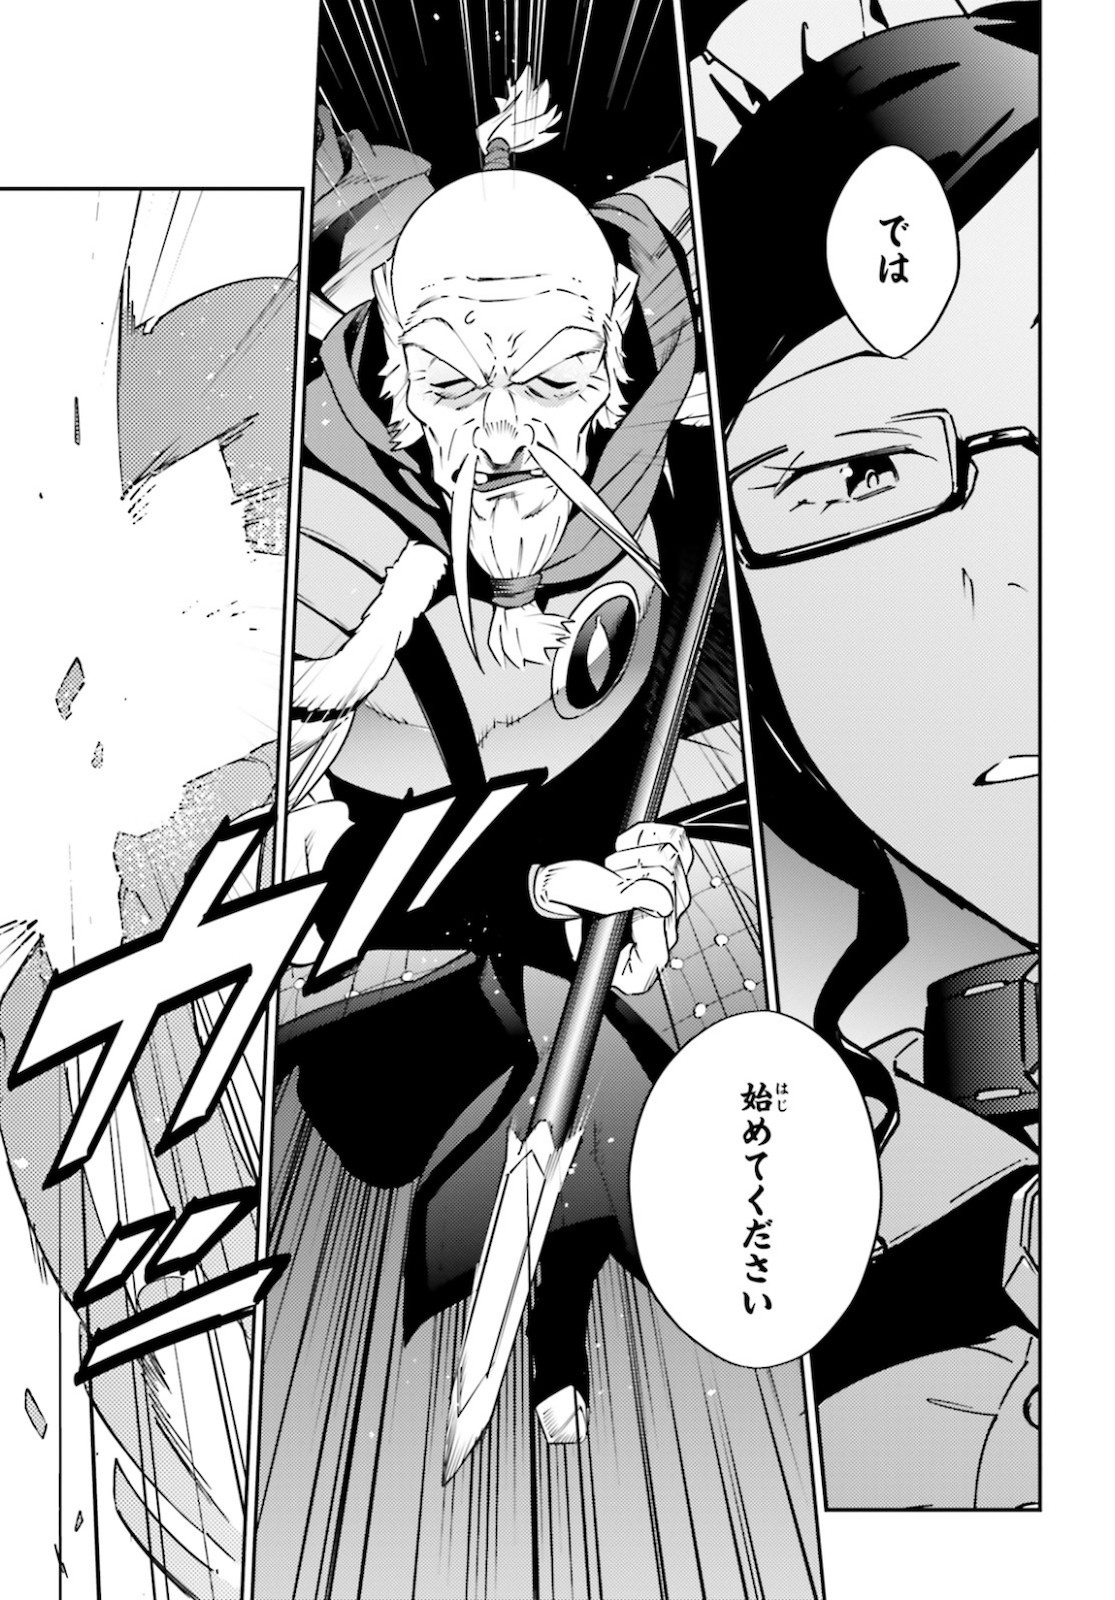 Overlord Chapter 63 Page 5 Raw Sen Manga